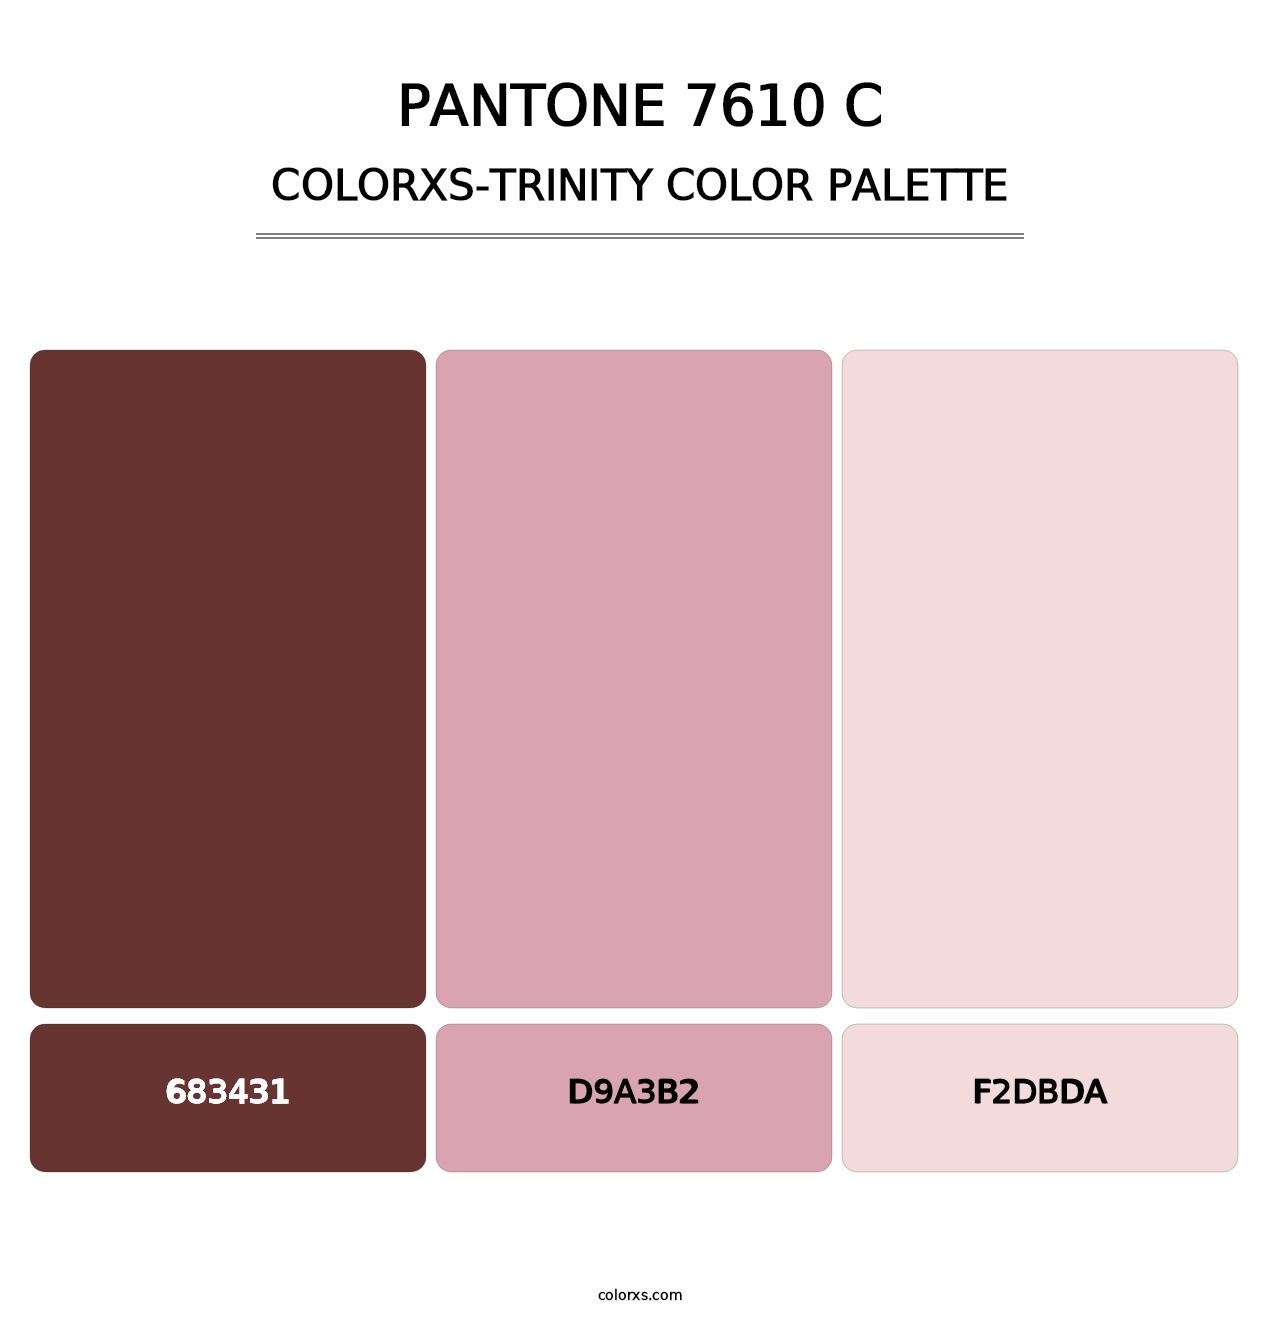 PANTONE 7610 C - Colorxs Trinity Palette